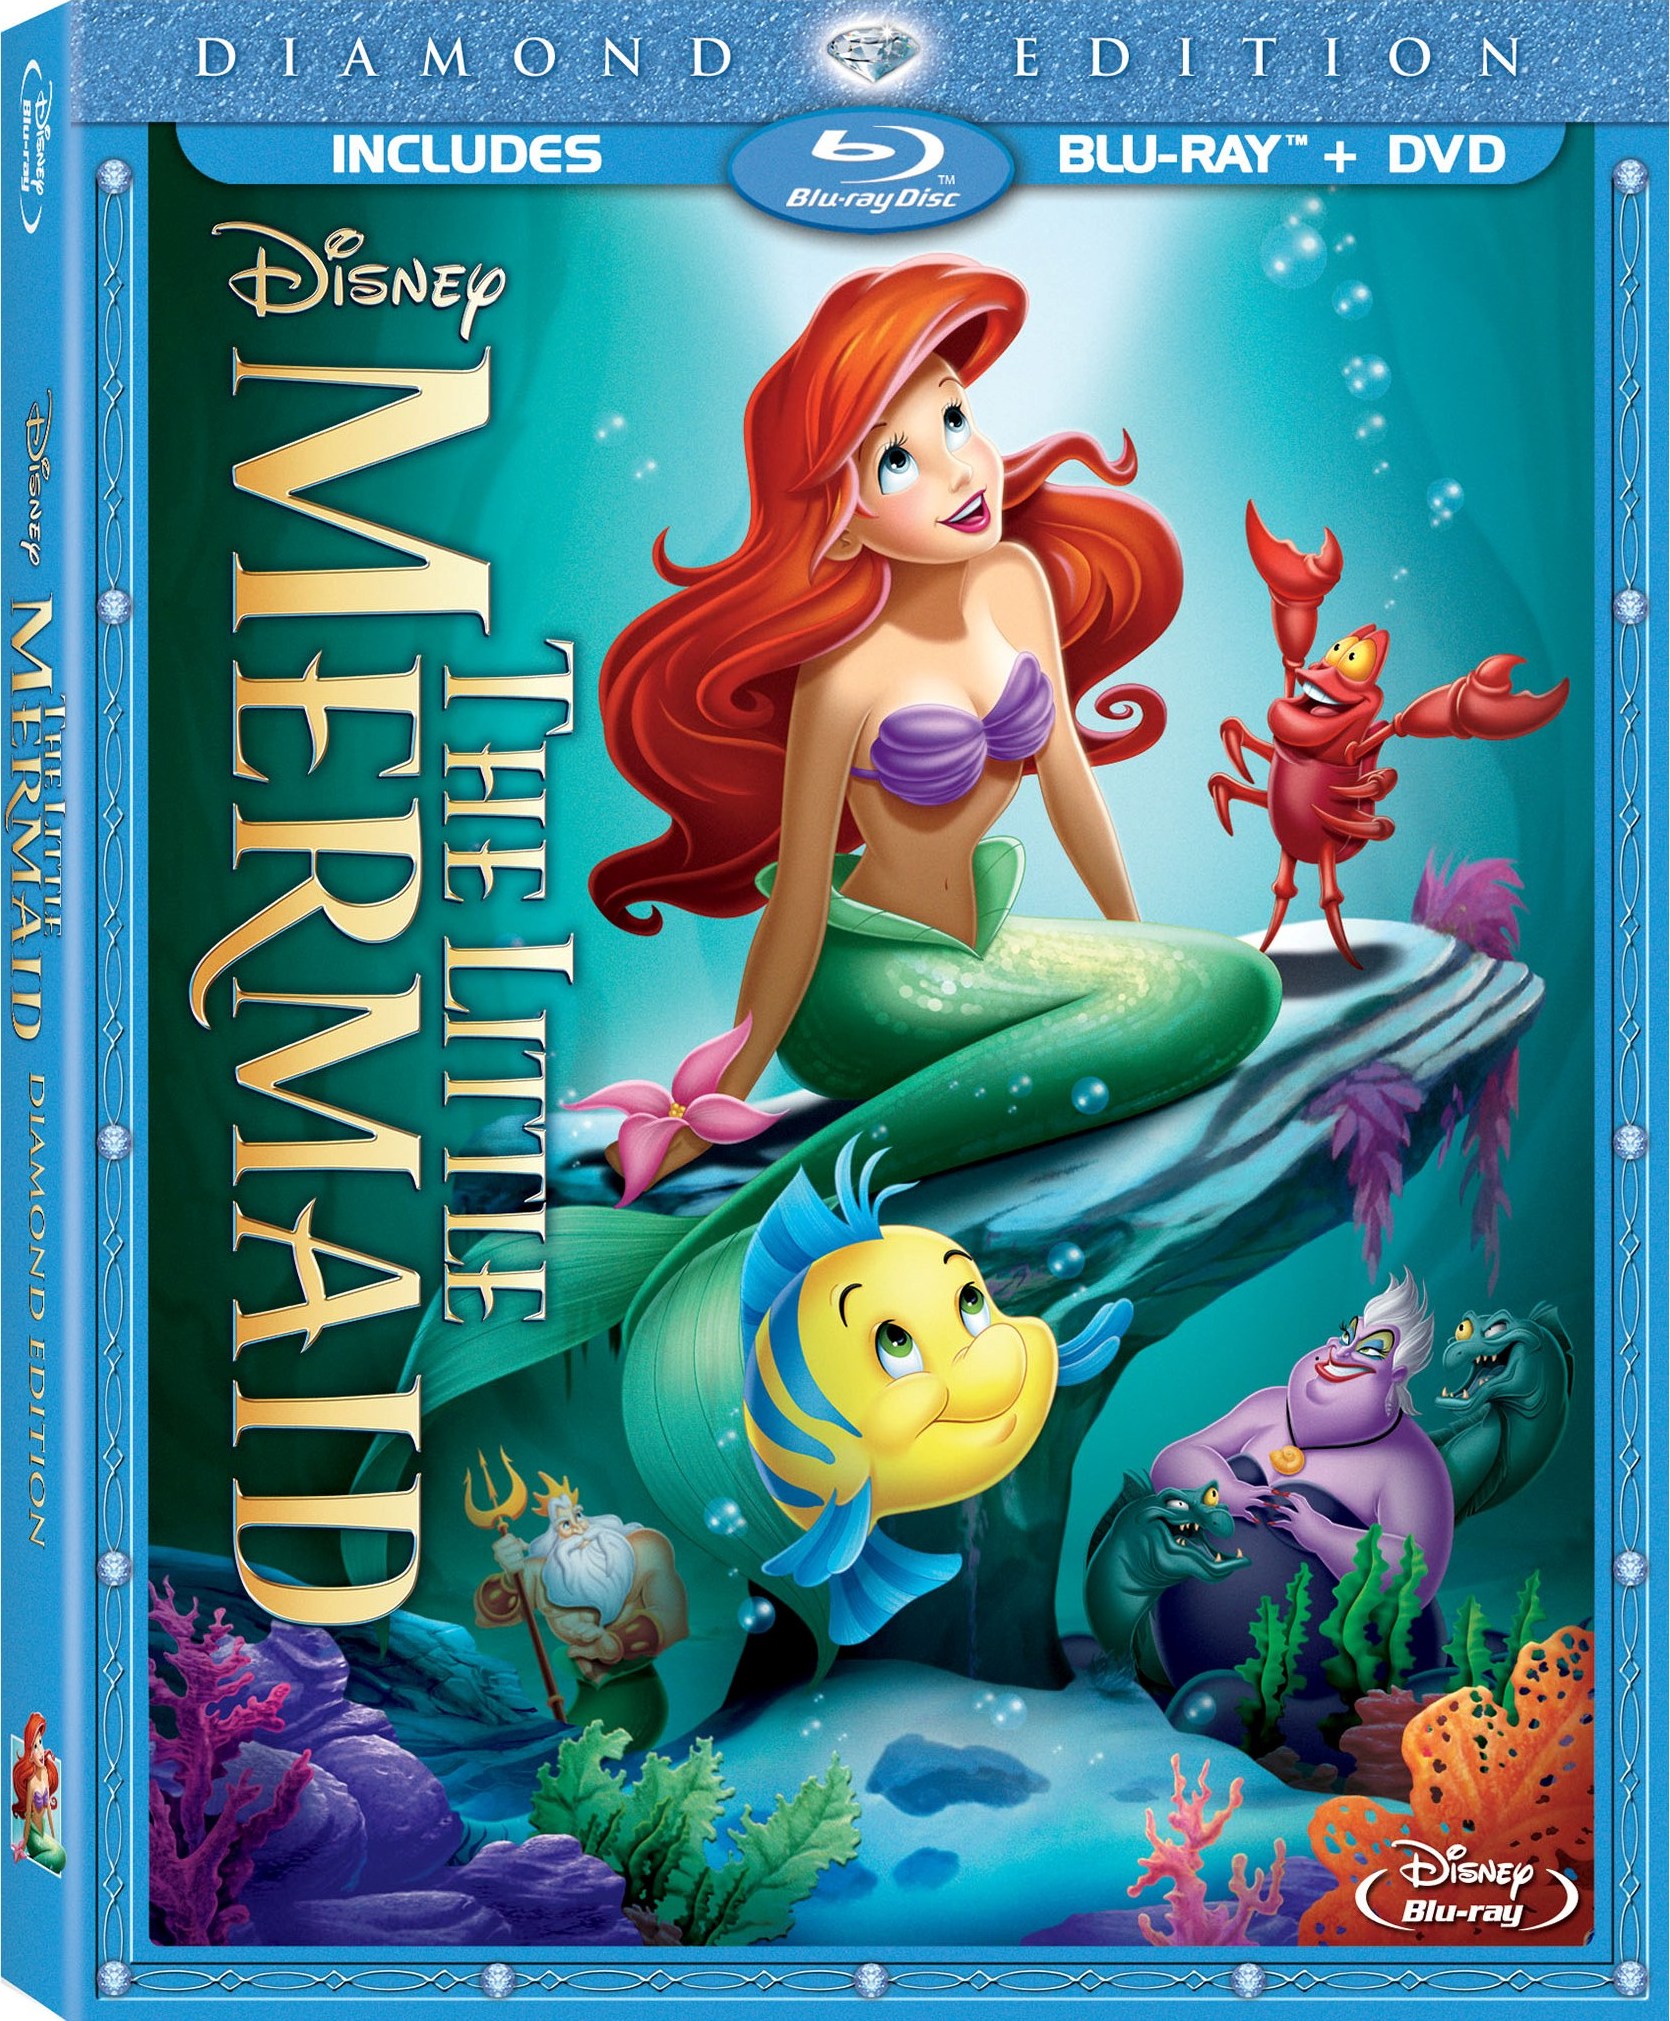 Must-have 2013 Disney Movies on Blu-Ray - Life. Family. Joy